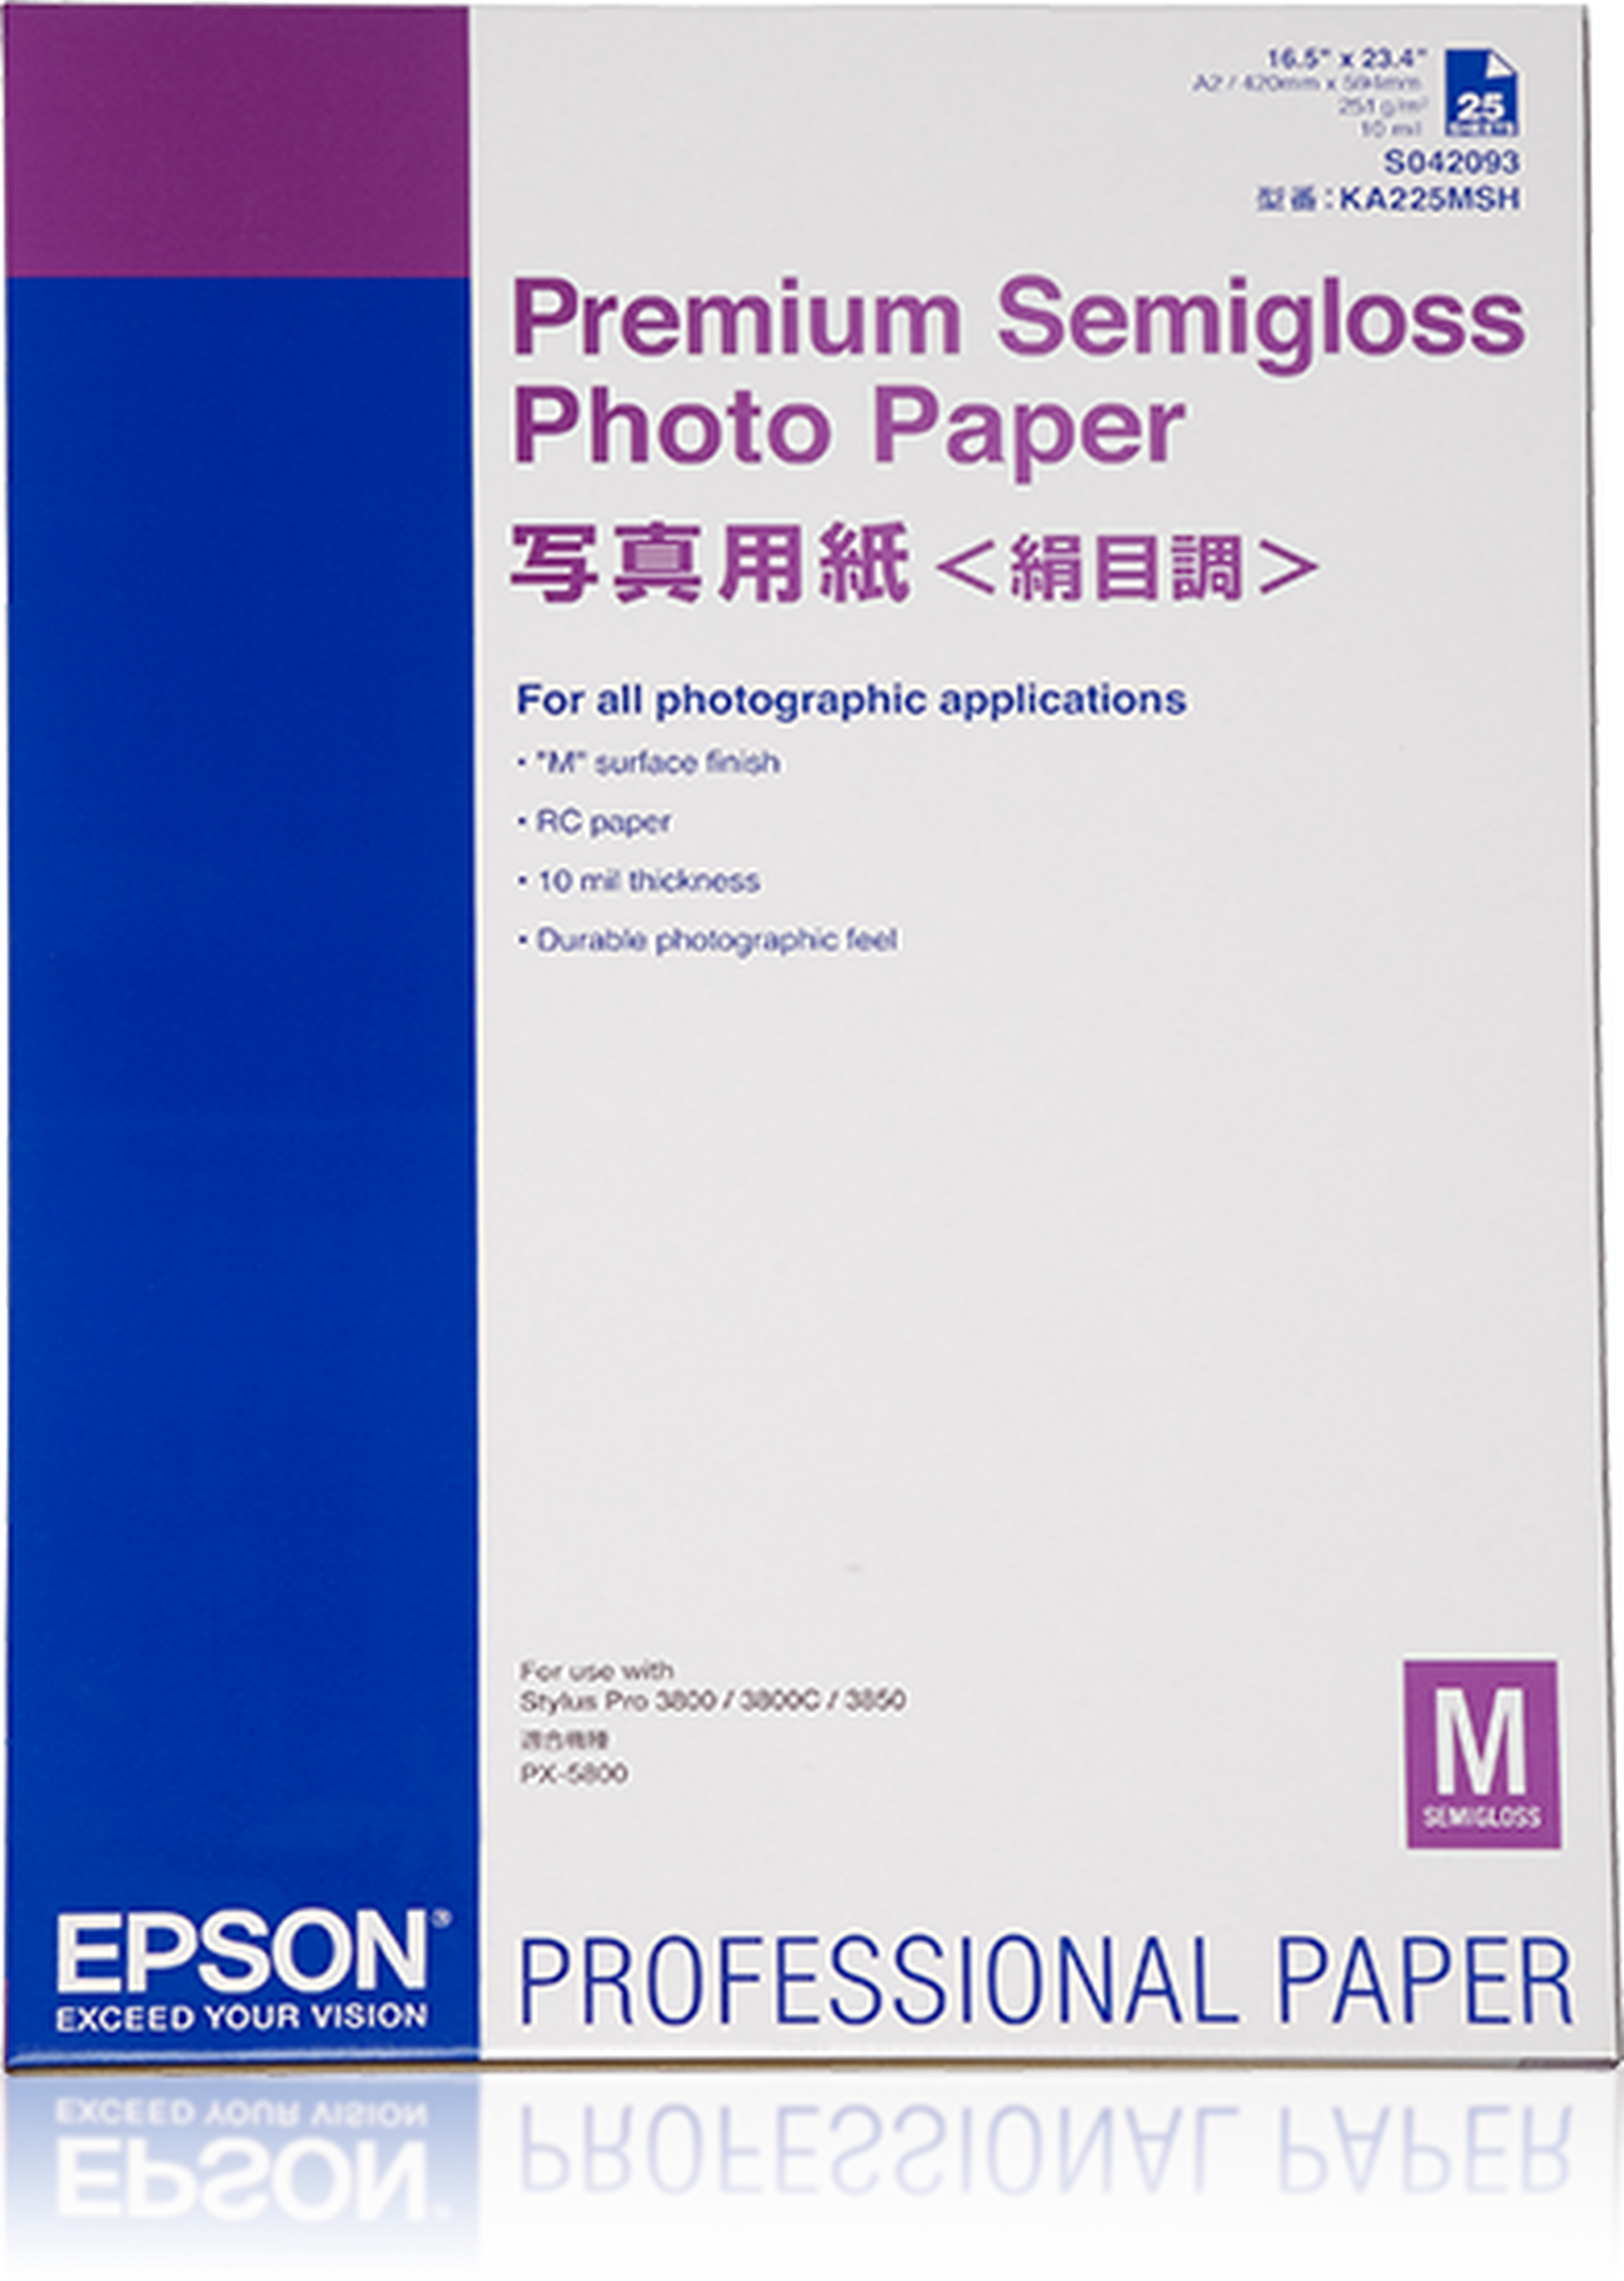 Epson Premium Semigloss Photo Paper - A2, 250g/m² - 25 sheets